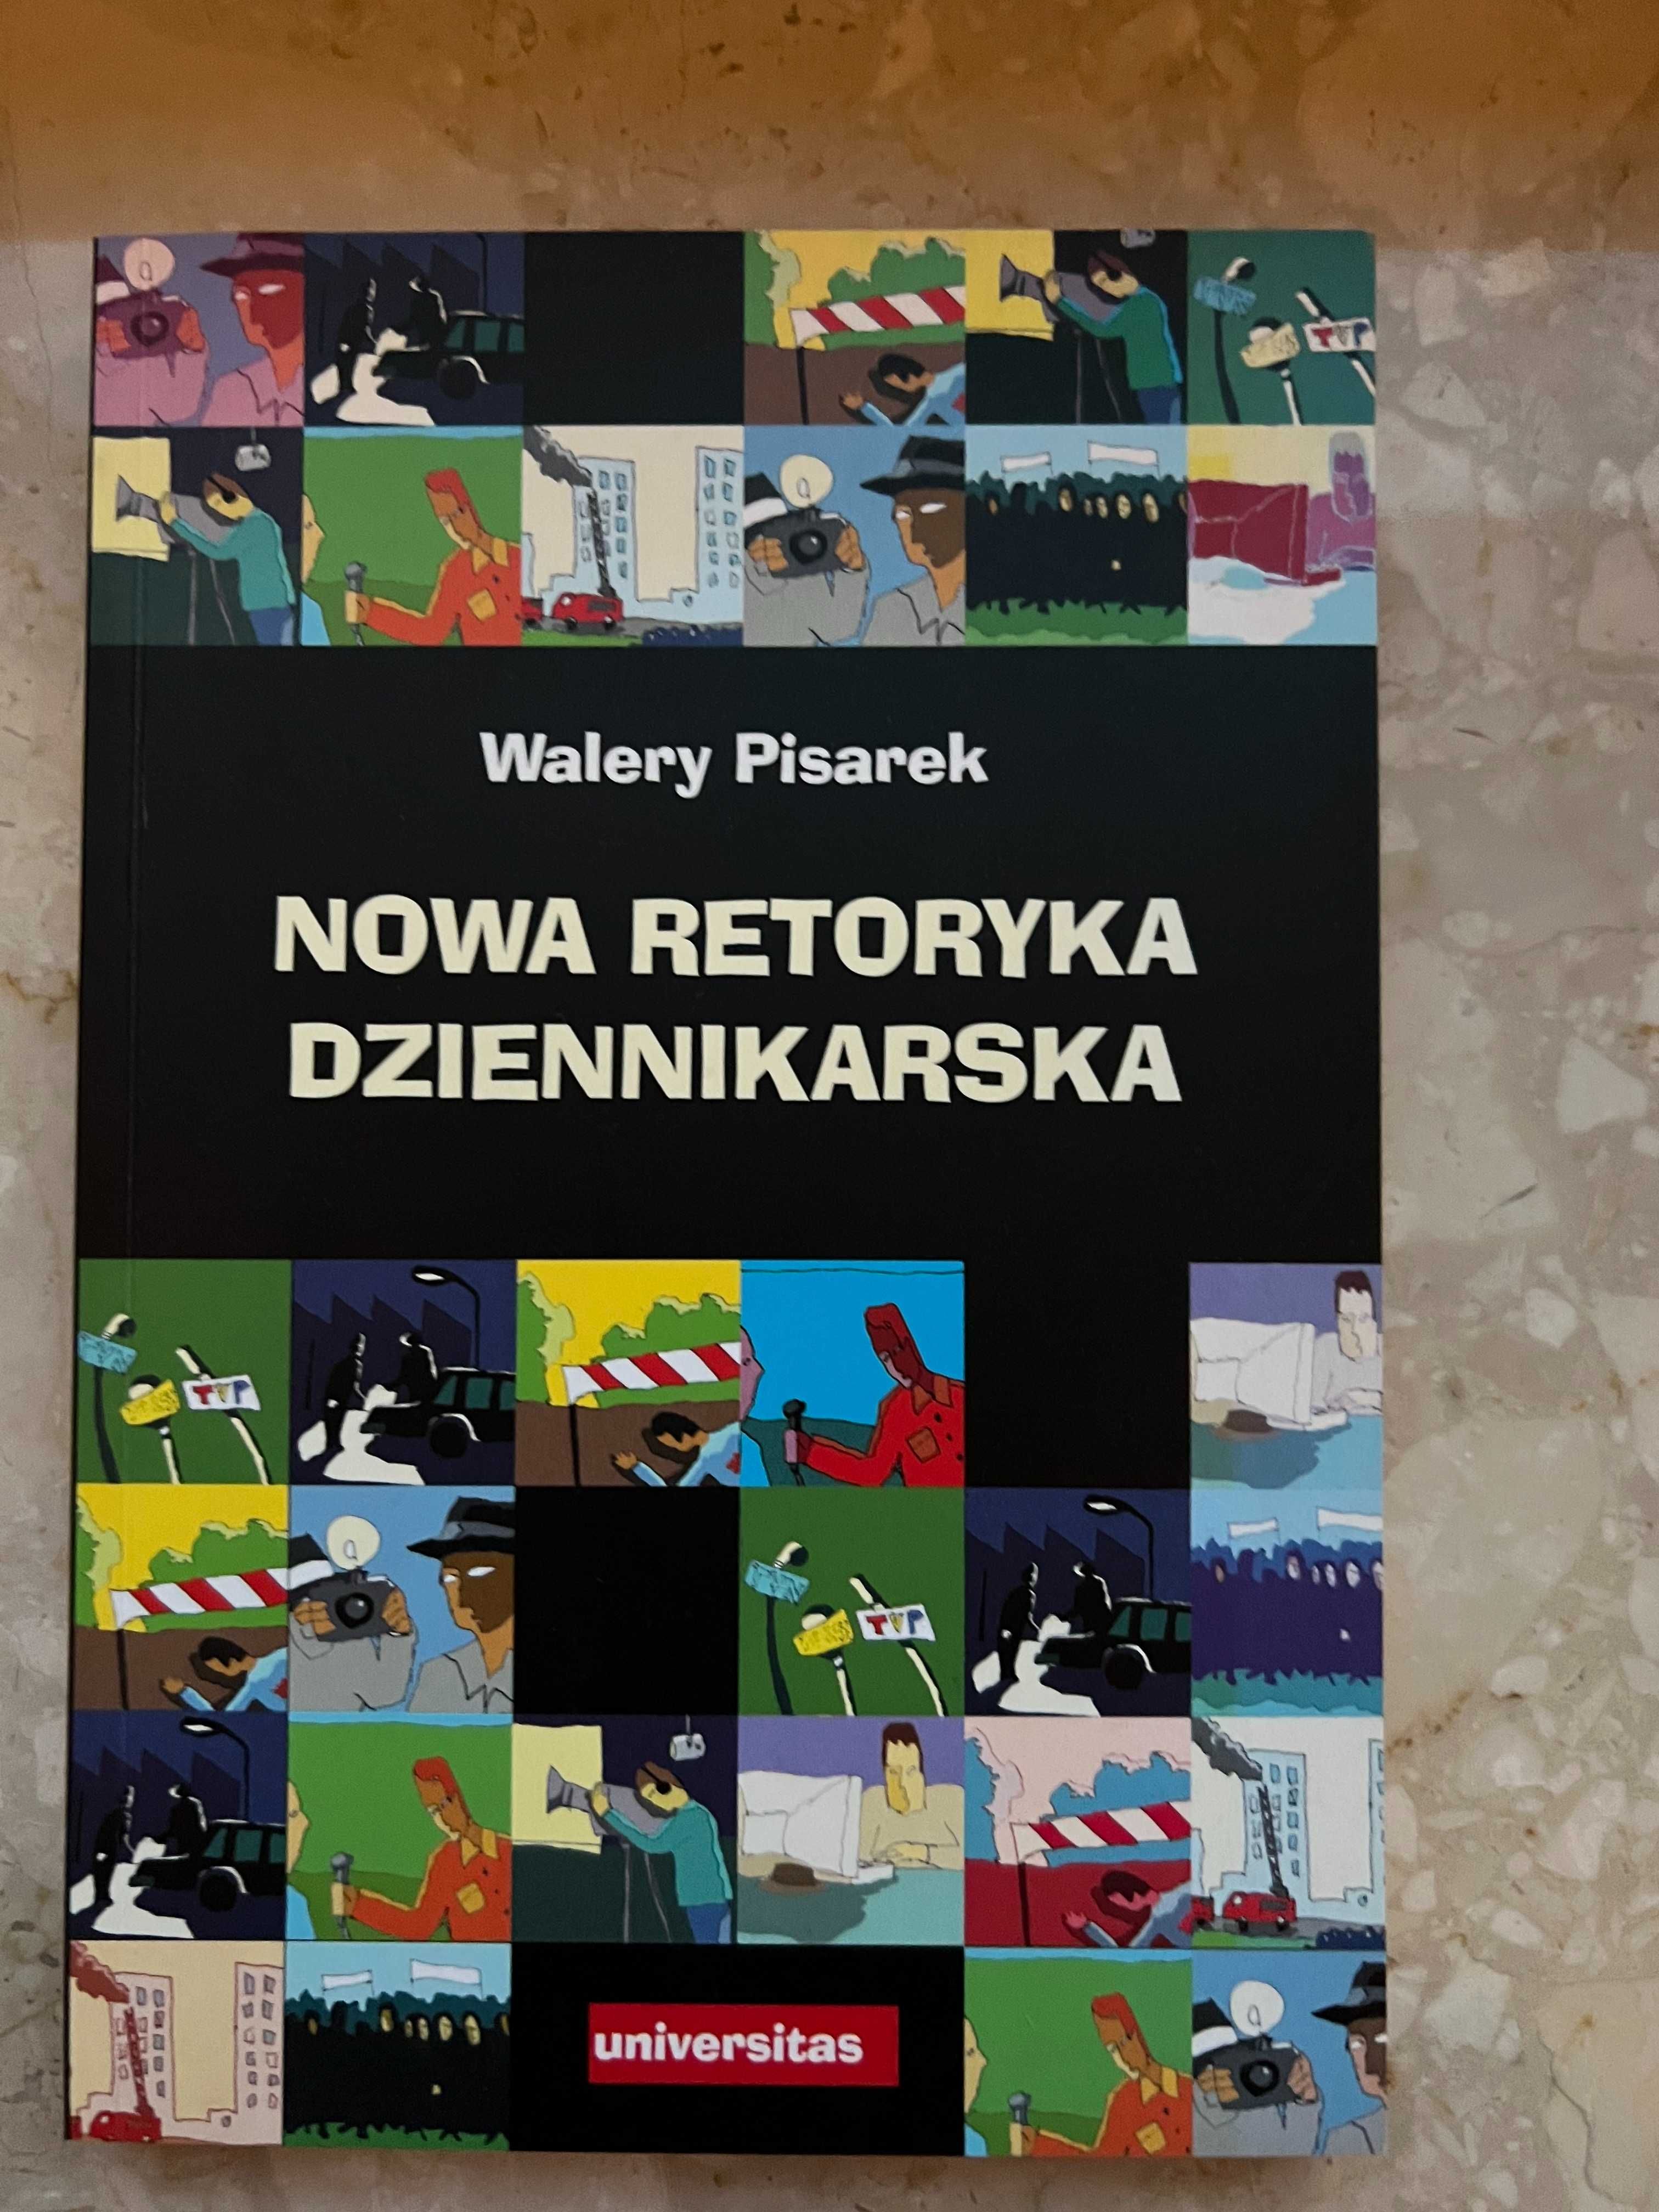 "Nowa retoryka dziennikarska"
Walery Pisarek